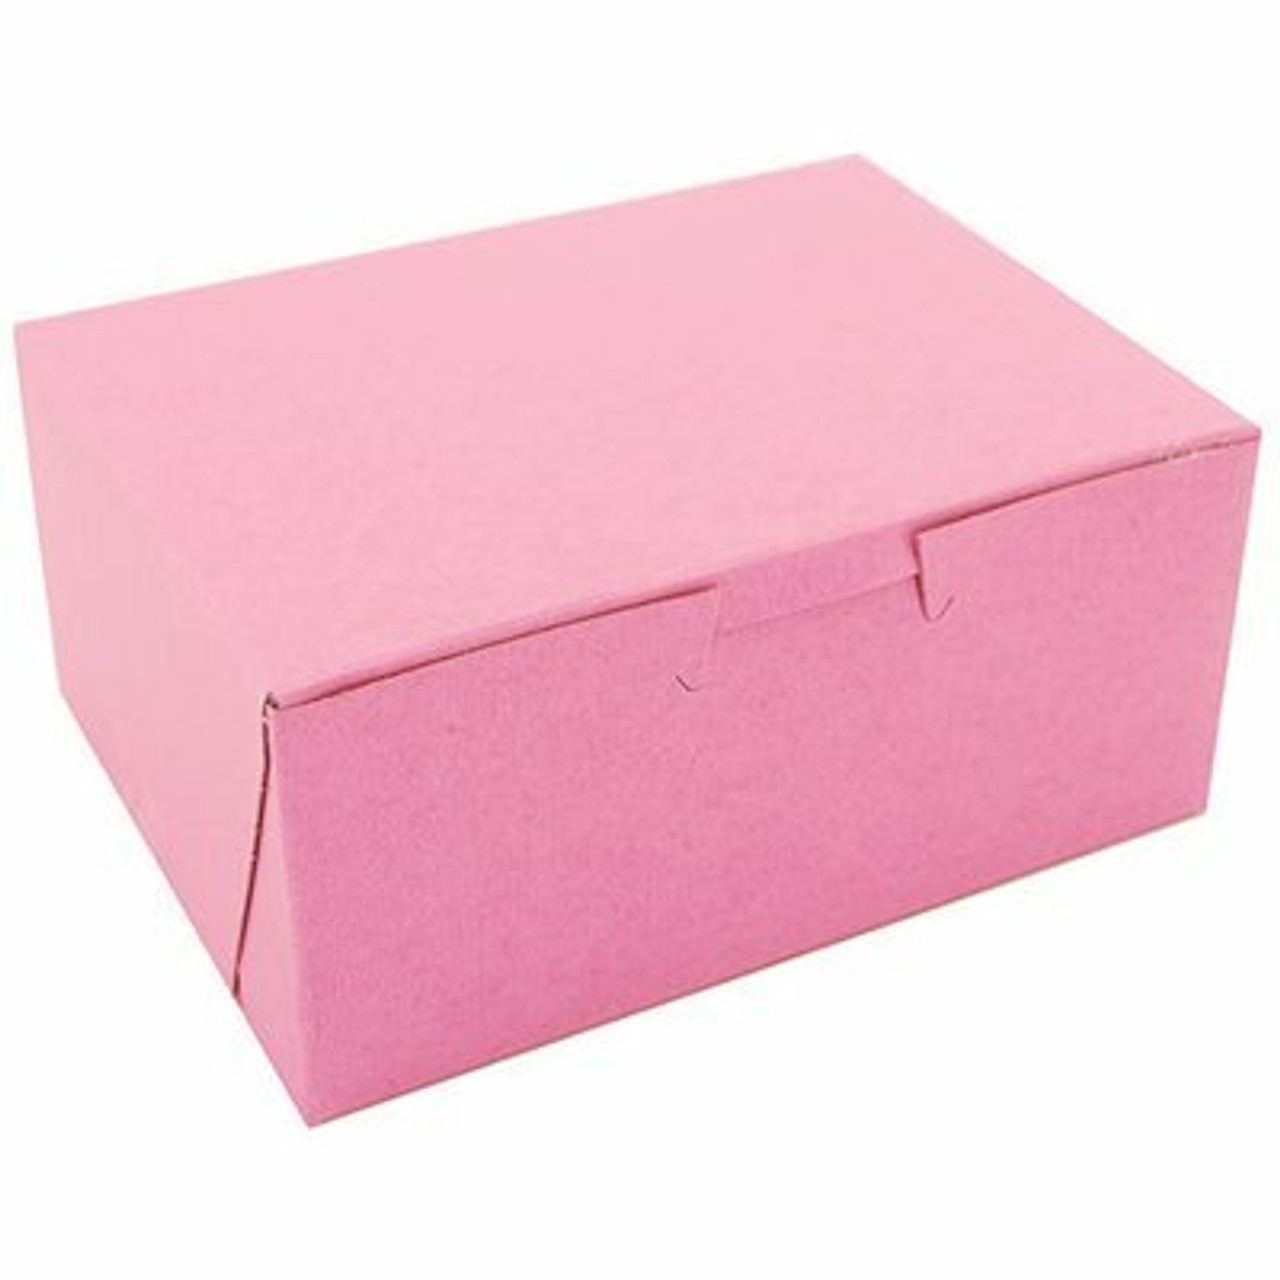 Southern Champion Tray Pink Non-Window Bakery Box 6 X 4-1/2 X 2-3/4" (250 Per Case)